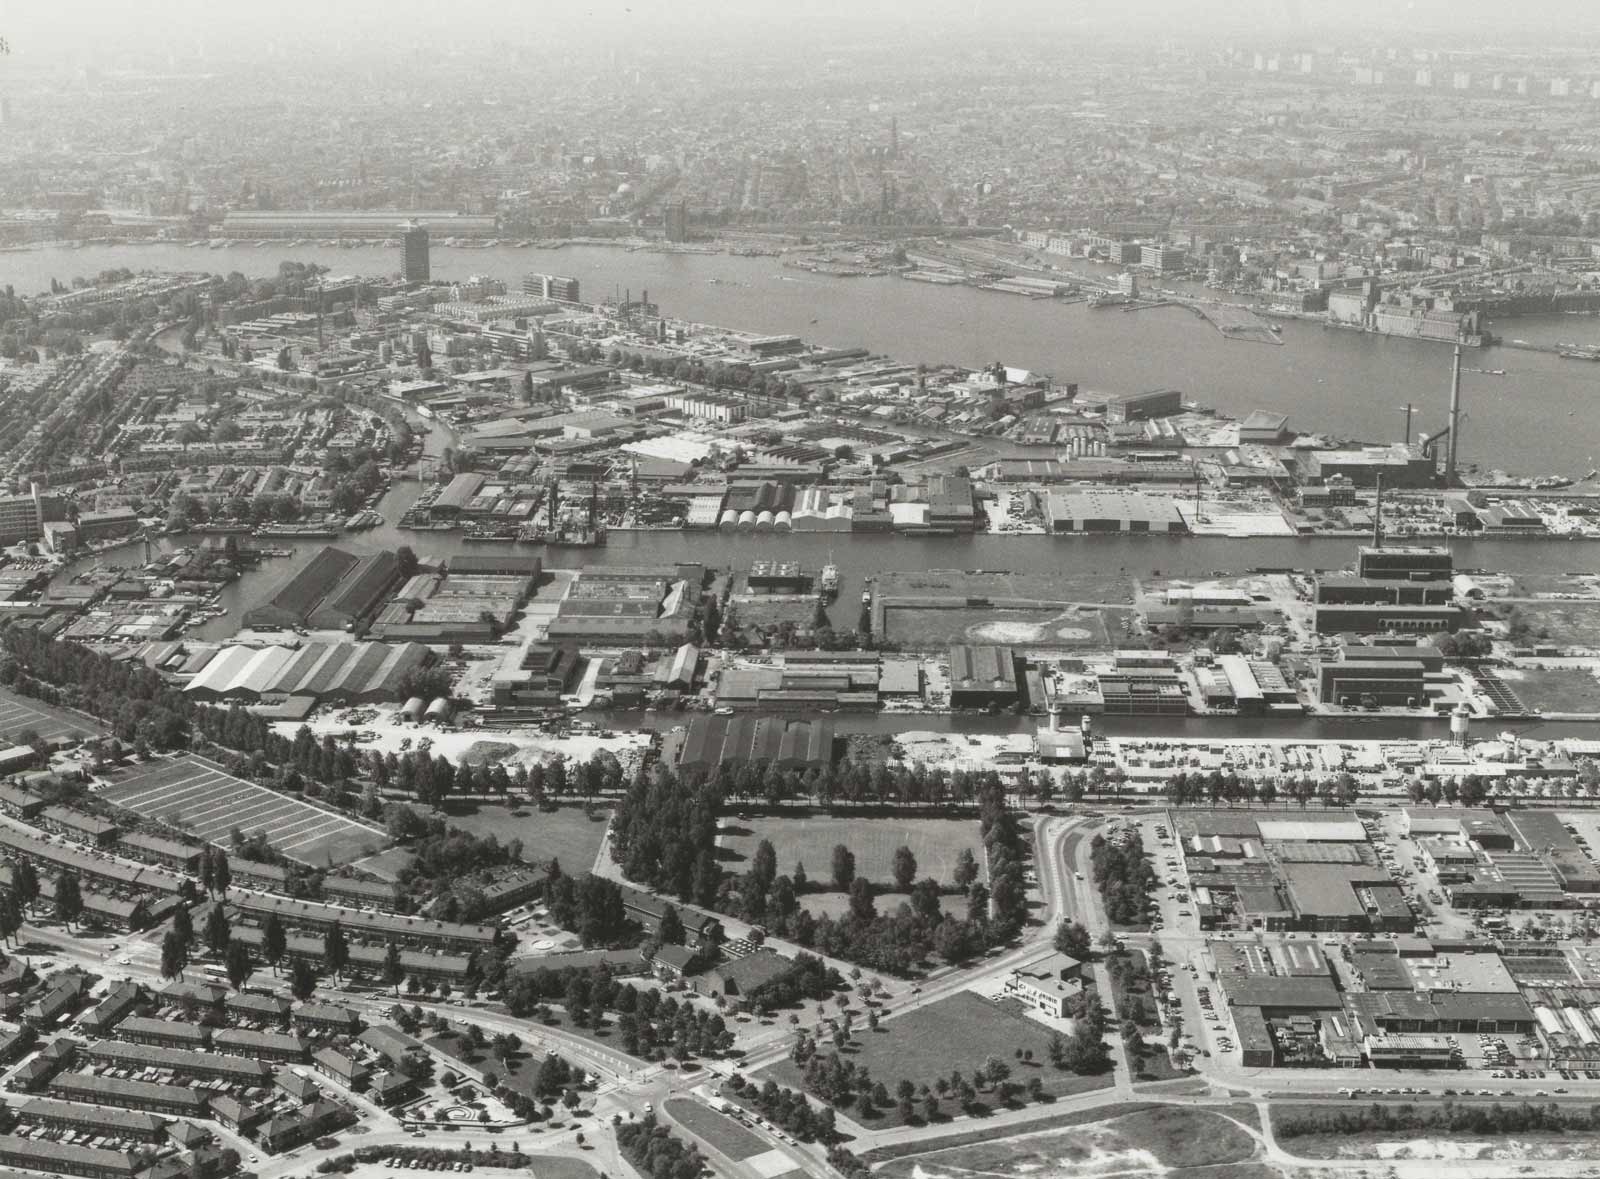 1970 aerial photograph of the Klaprozenbuurt and Buiksloteham areas